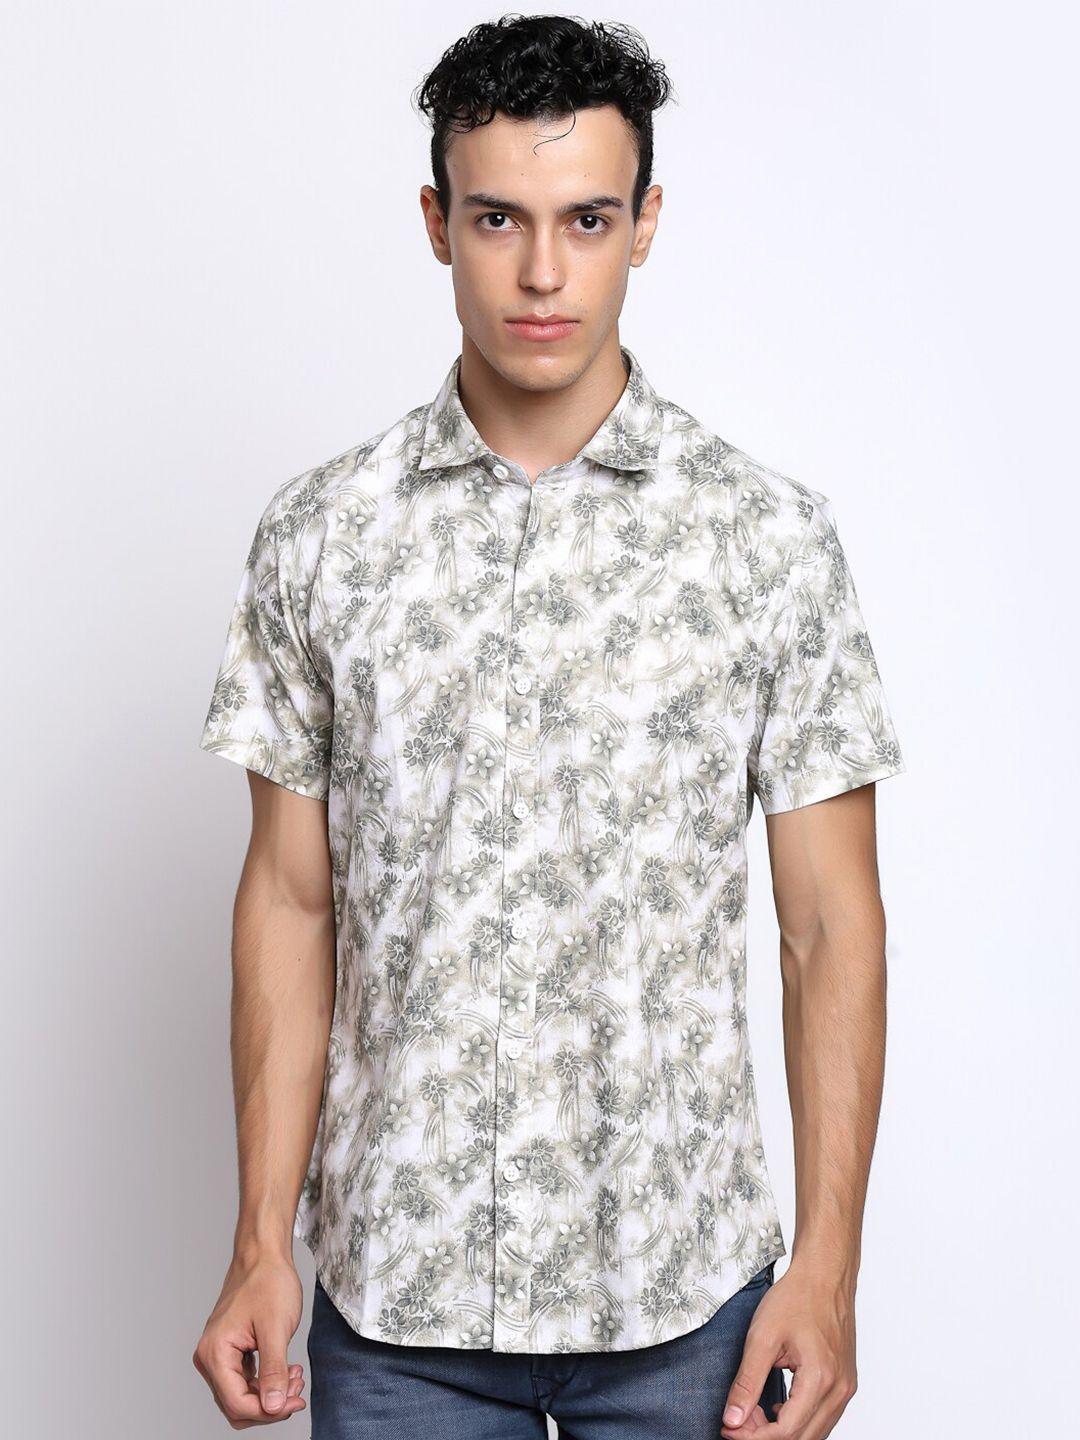 dezano classic floral printed satin shirt